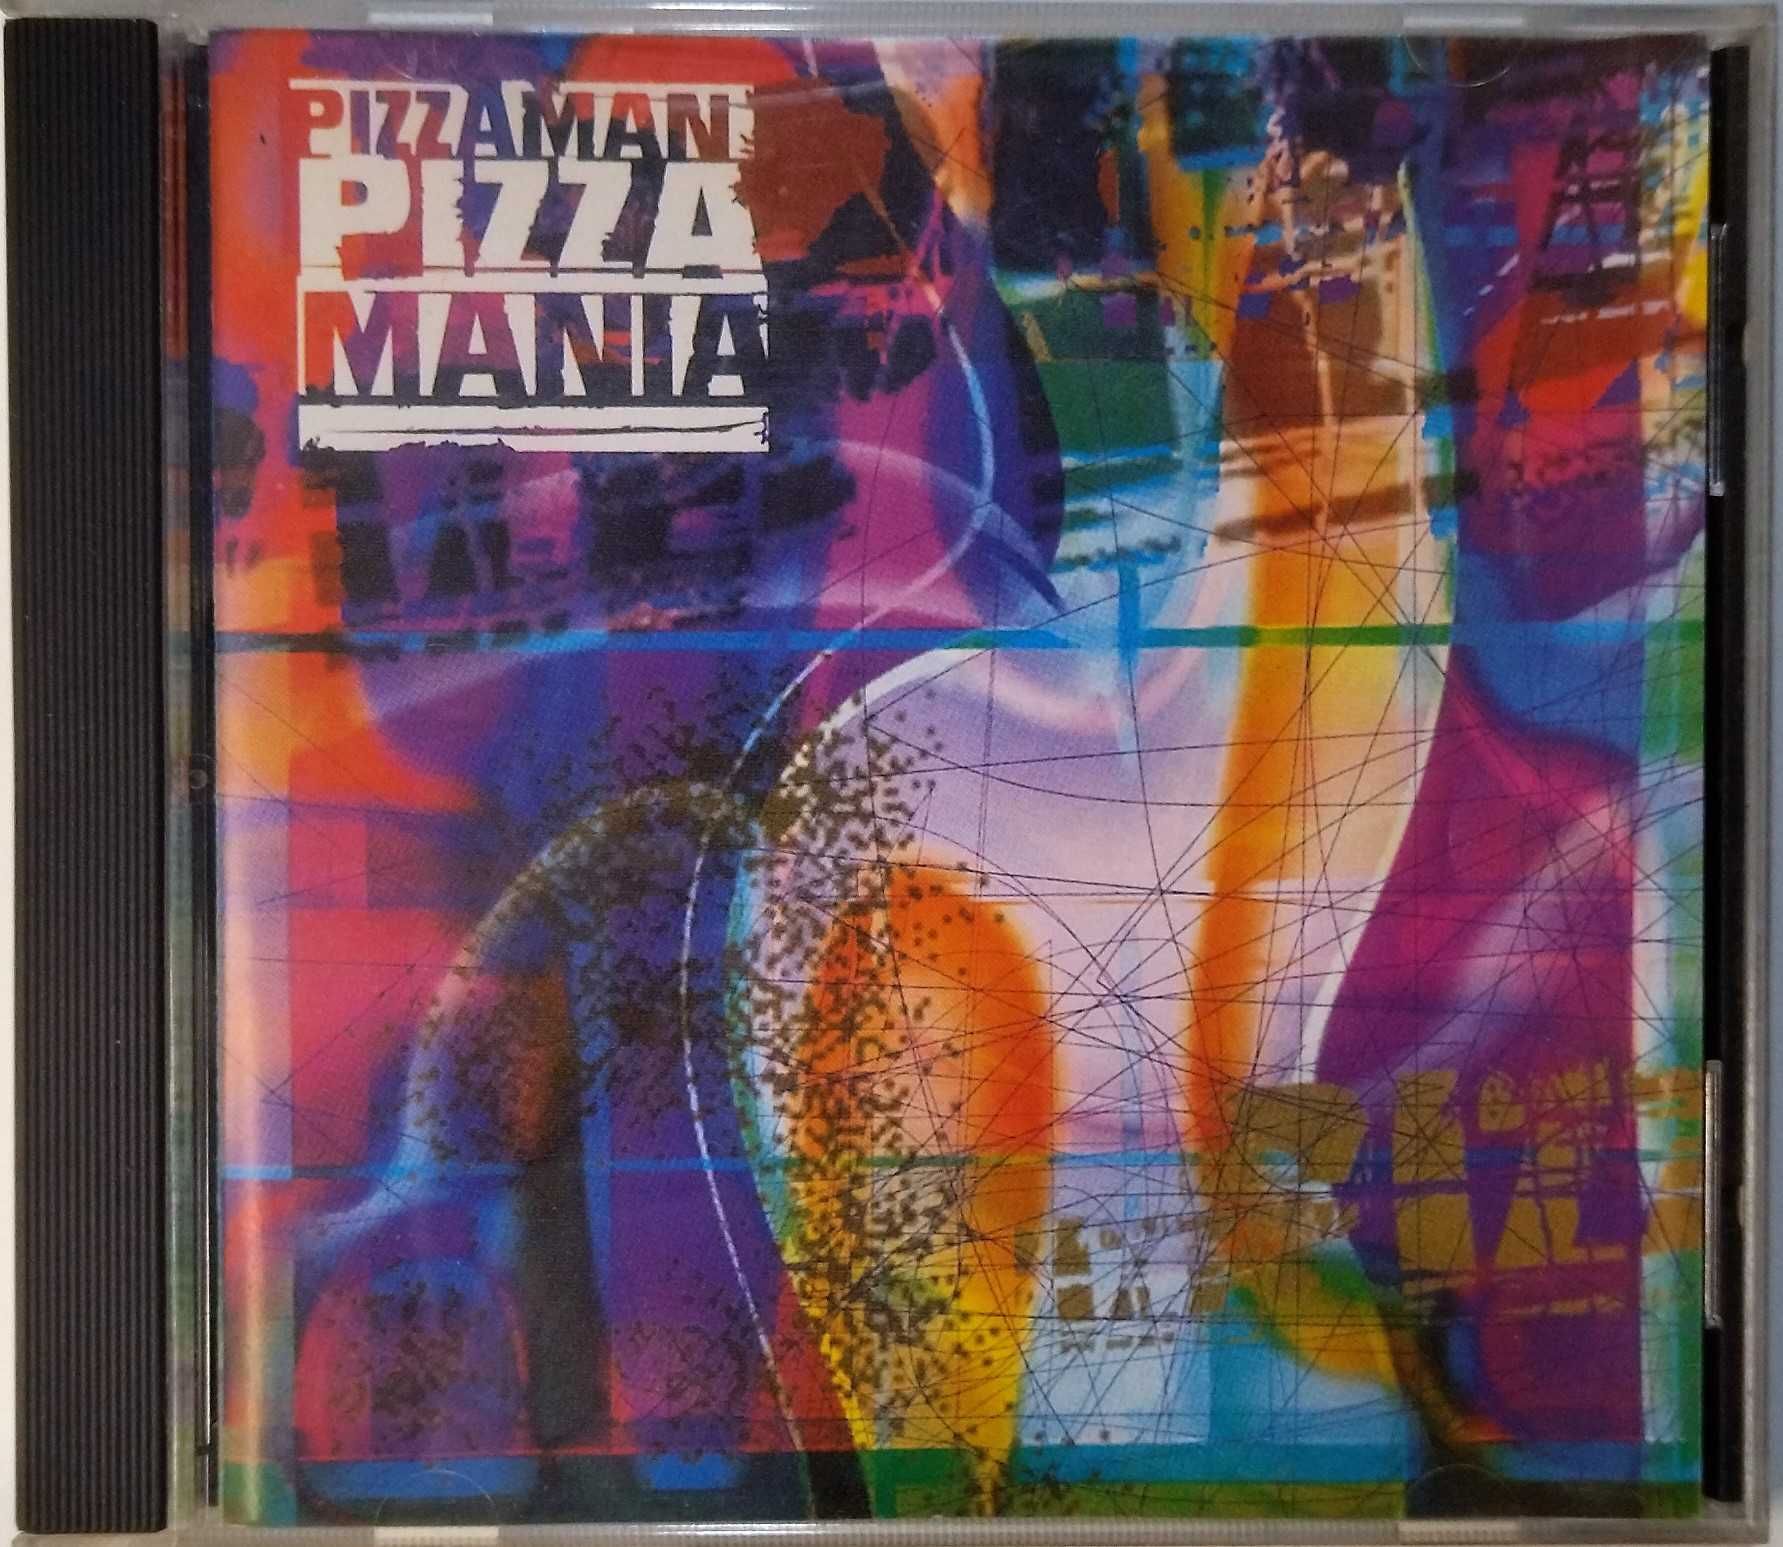 PizzaMan - Pizza Mania | 1 CD